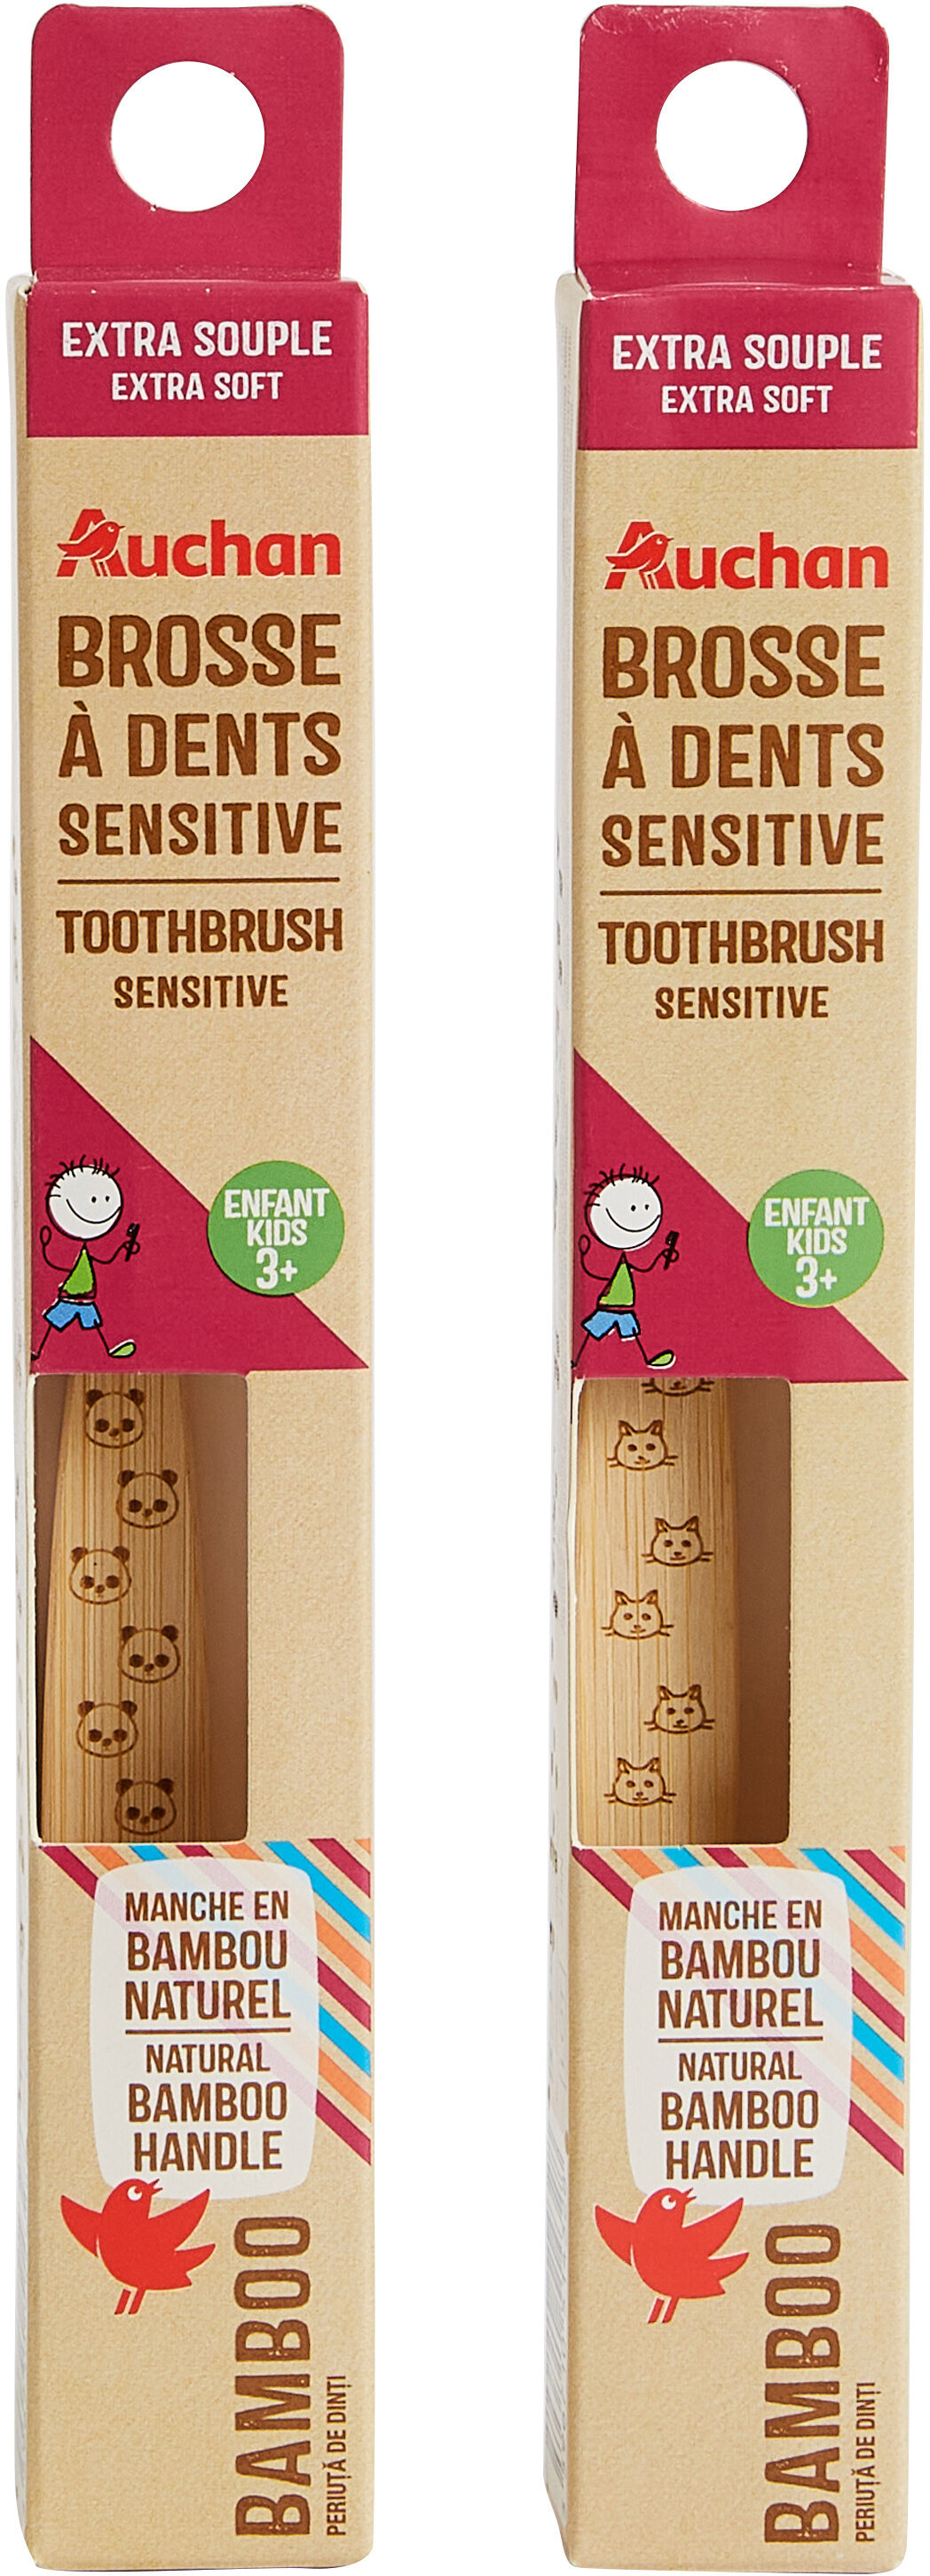 Brosse à dents sensitive Enfant 3+ - Product - fr